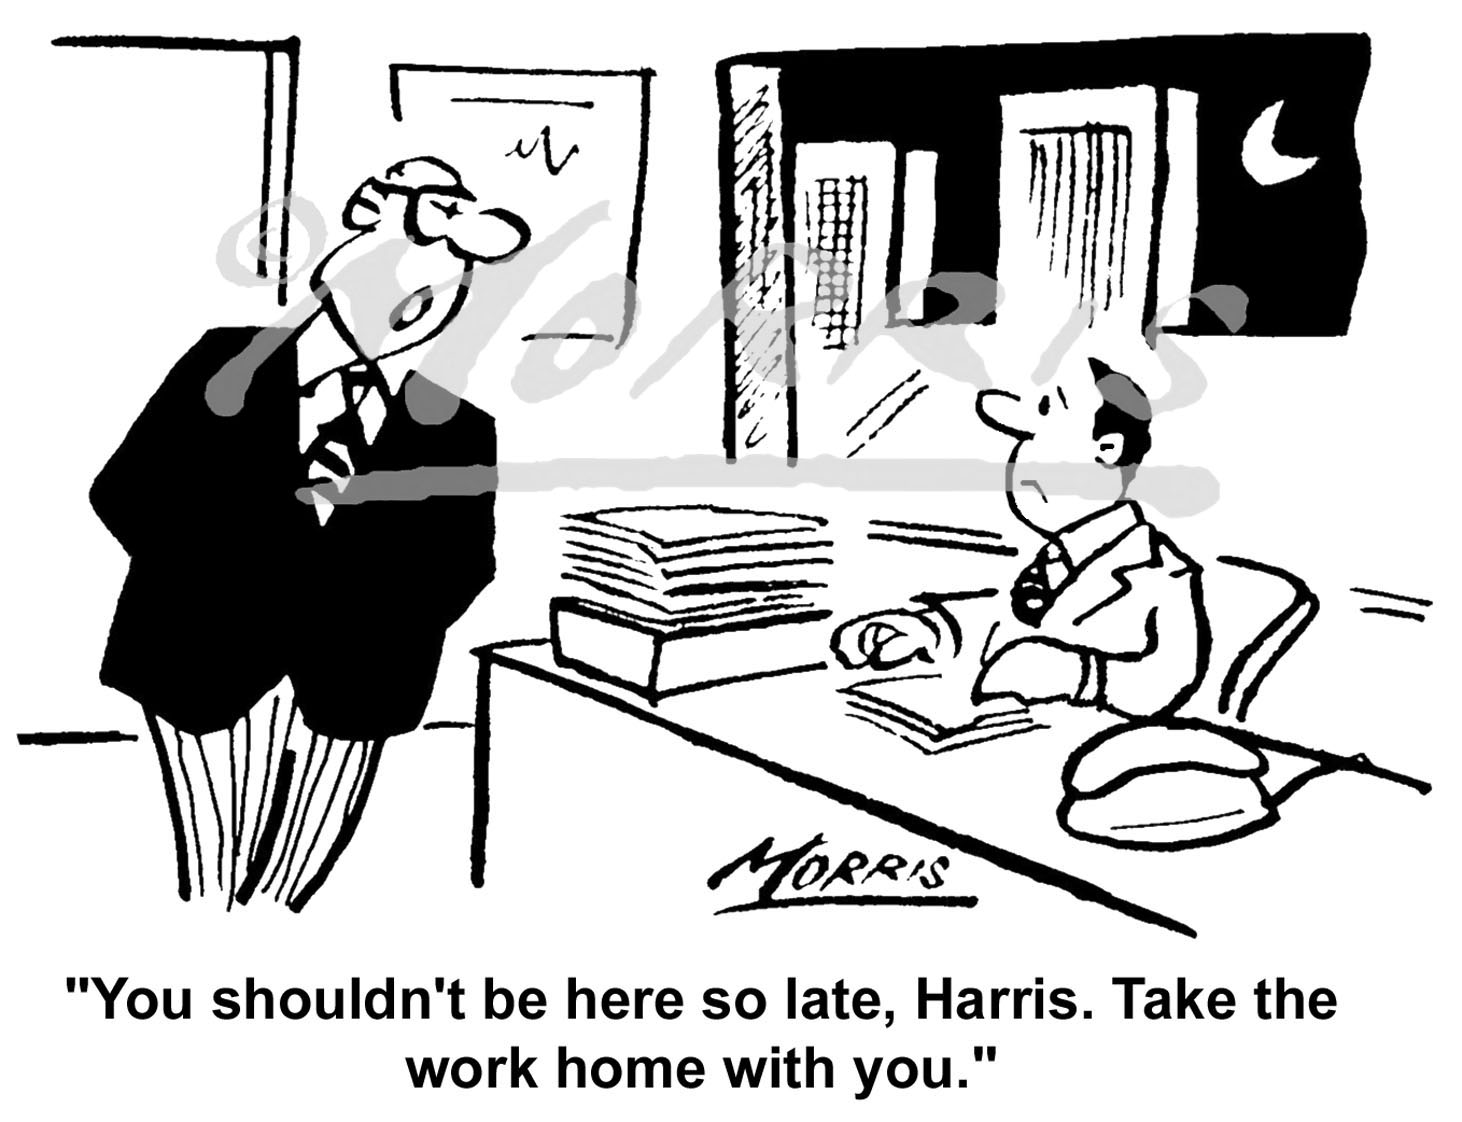 Manager employee comic office cartoon Ref: 0073bw | Business cartoons